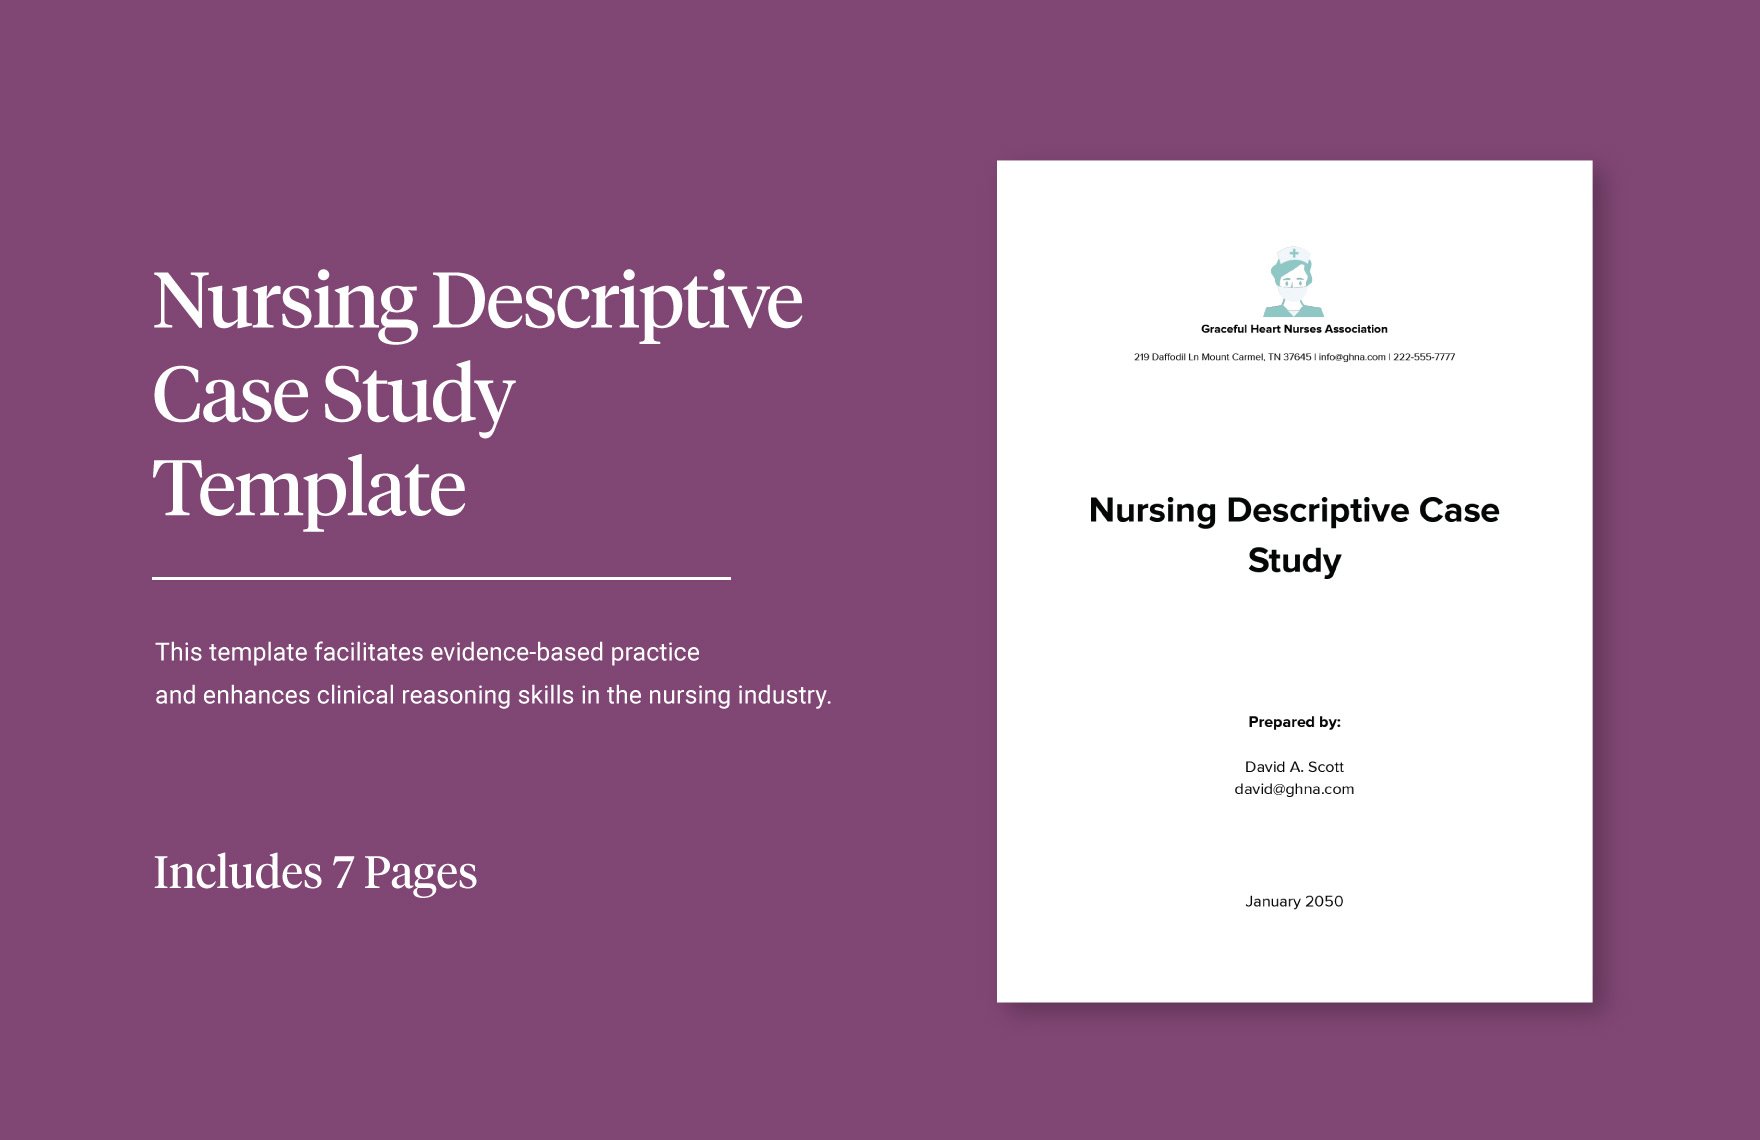 Nursing Descriptive Case Study Template in Word, Google Docs, PDF